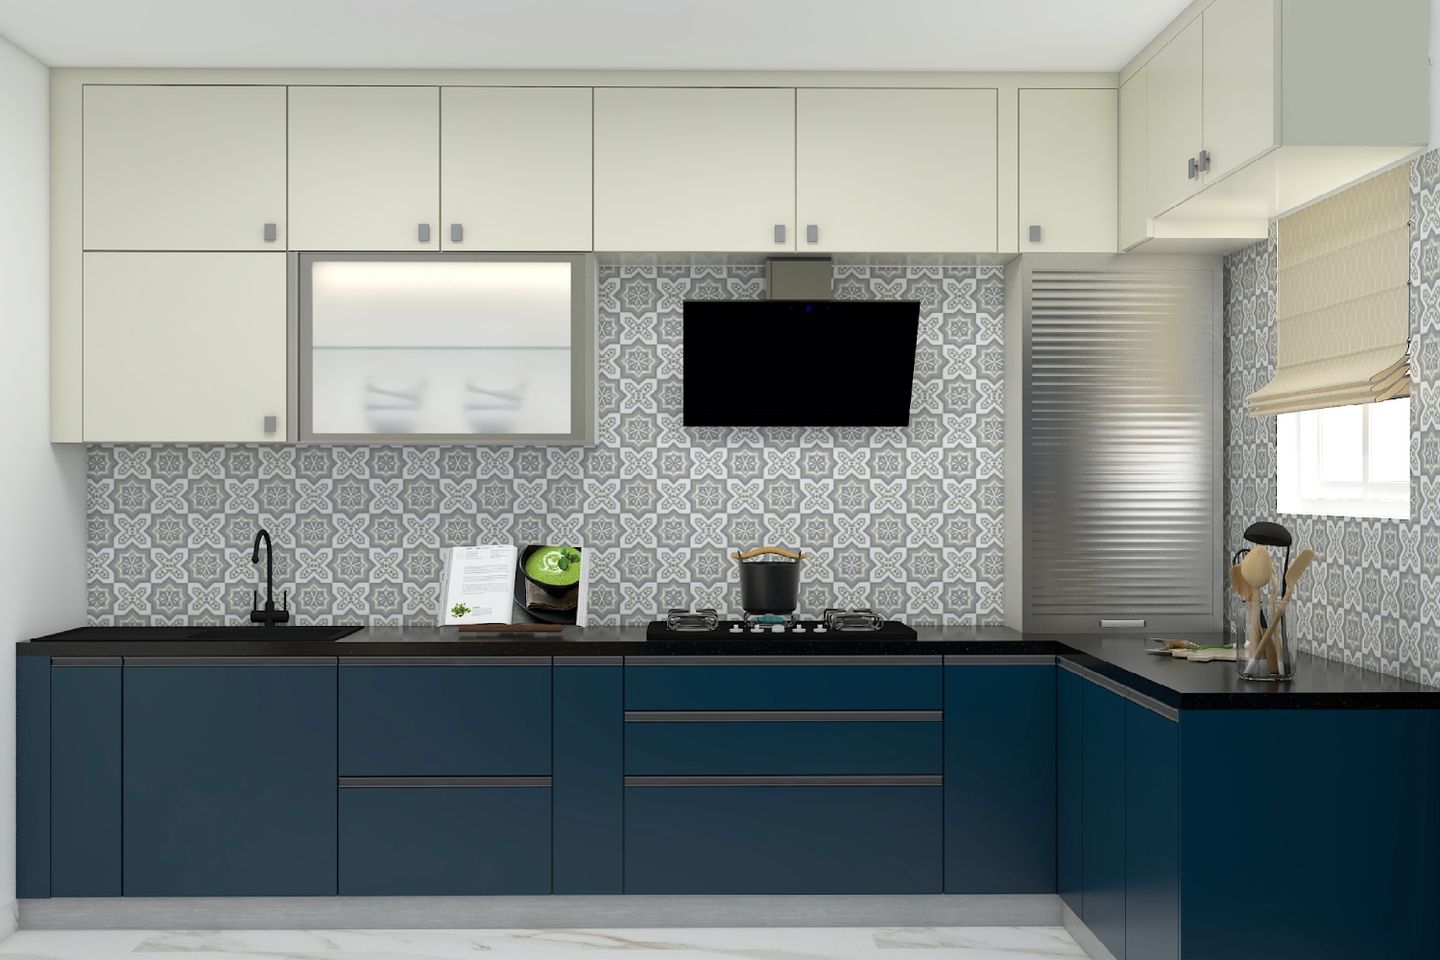 13X12 Ft L-Shaped Kitchen Design With A Black Granite Countertop - Livspace